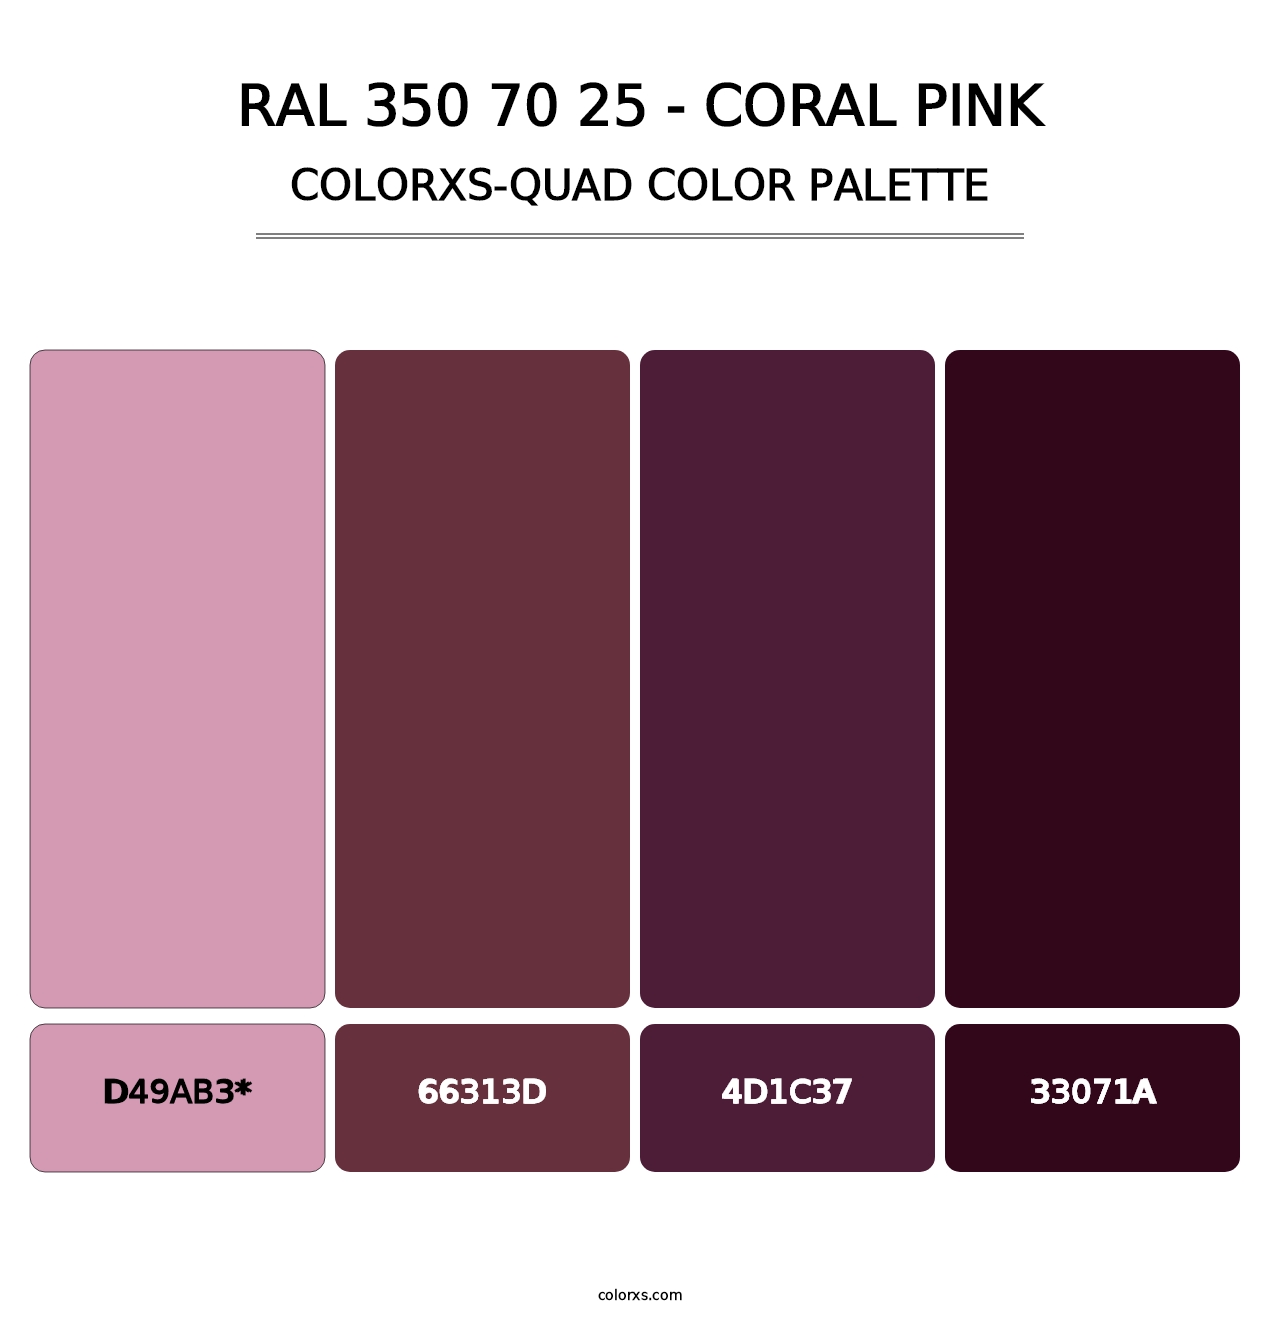 RAL 350 70 25 - Coral Pink - Colorxs Quad Palette